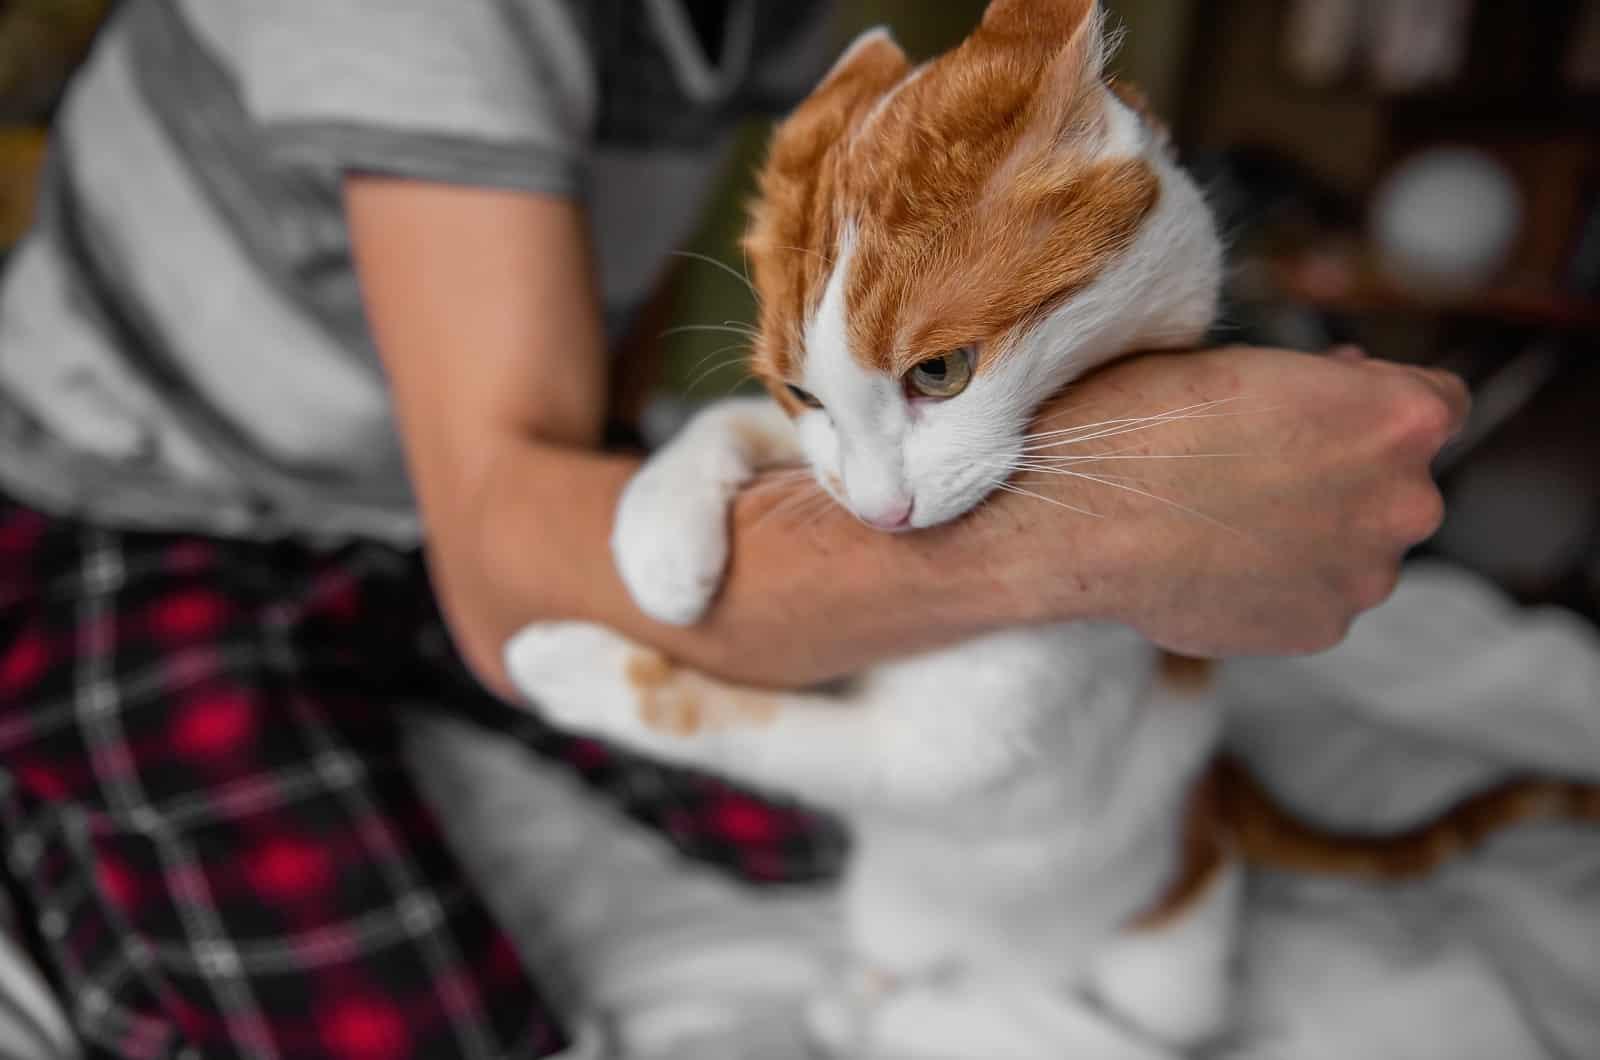 Cat bitting arm